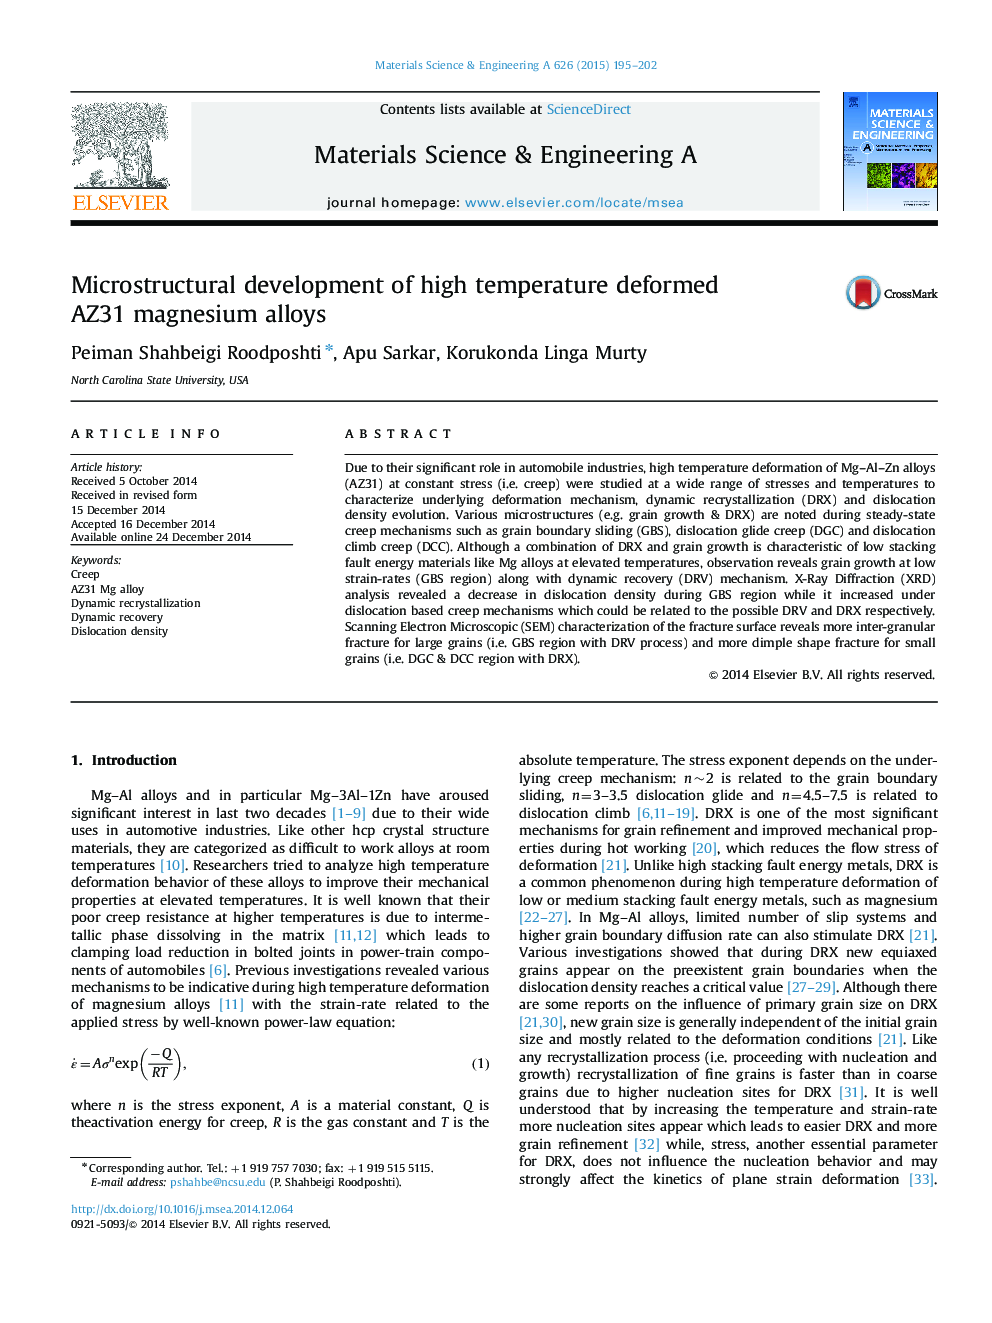 Microstructural development of high temperature deformed AZ31 magnesium alloys